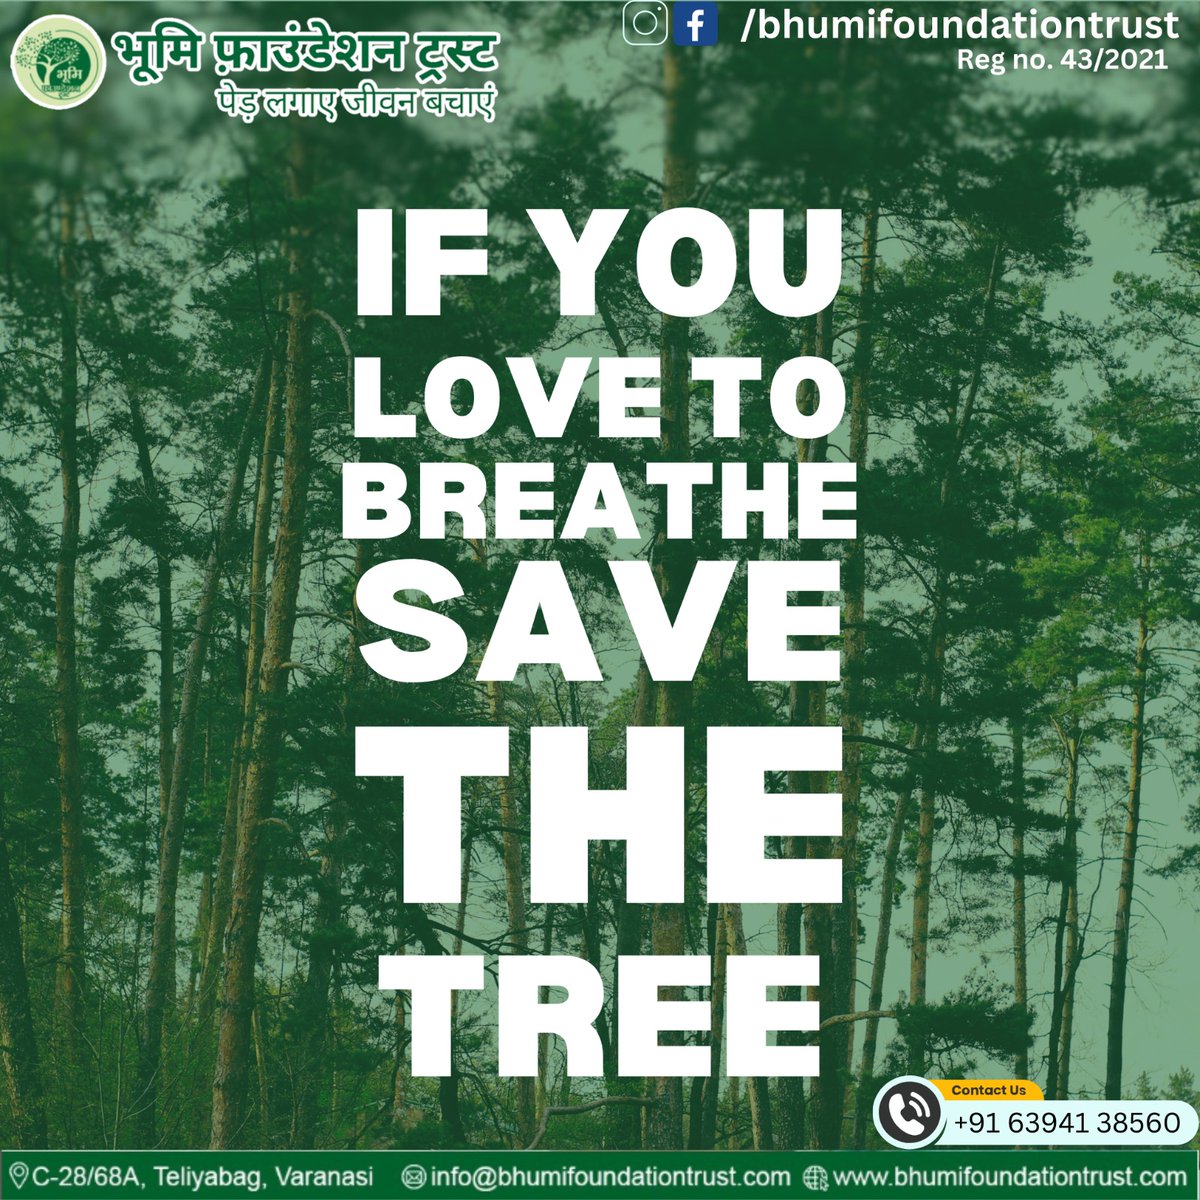 If you love to breathe save the tree.
जुड़िए भूमि फाऊंडेशन ट्रस्ट से :
bhumifoundationtrust.com

#saveenvironment #bhumifoundation #airpollution #savetree #savefuture #save #pollutionfreeindia